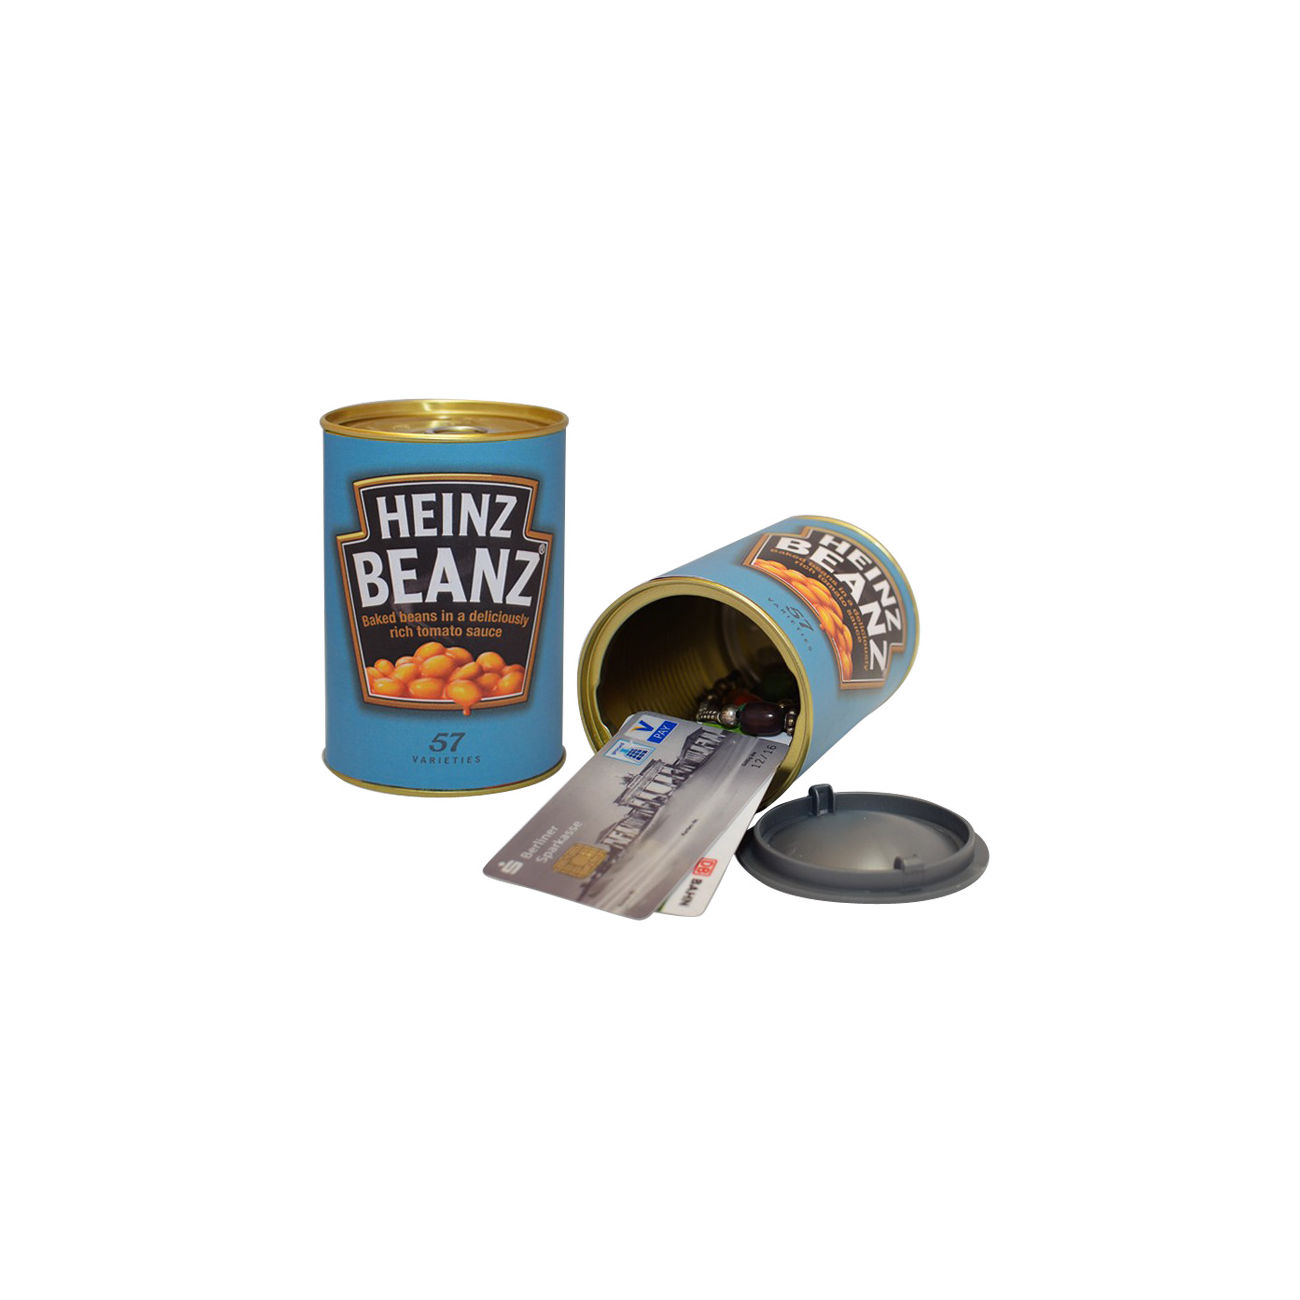   Dosensafe Heinz Beanz